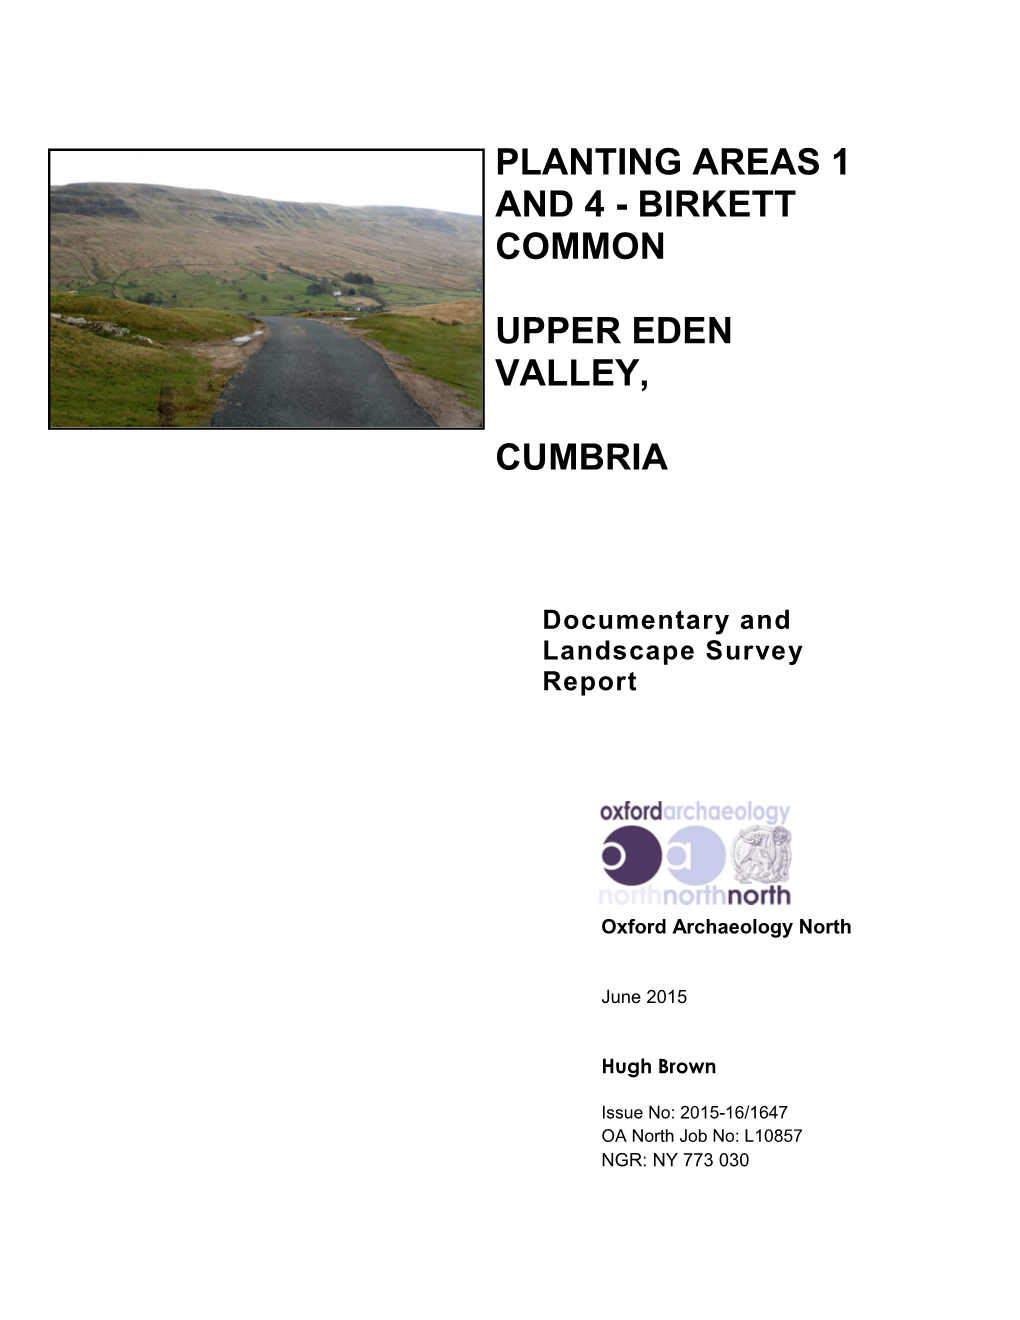 Birkett Common Upper Eden Valley, Cumbria